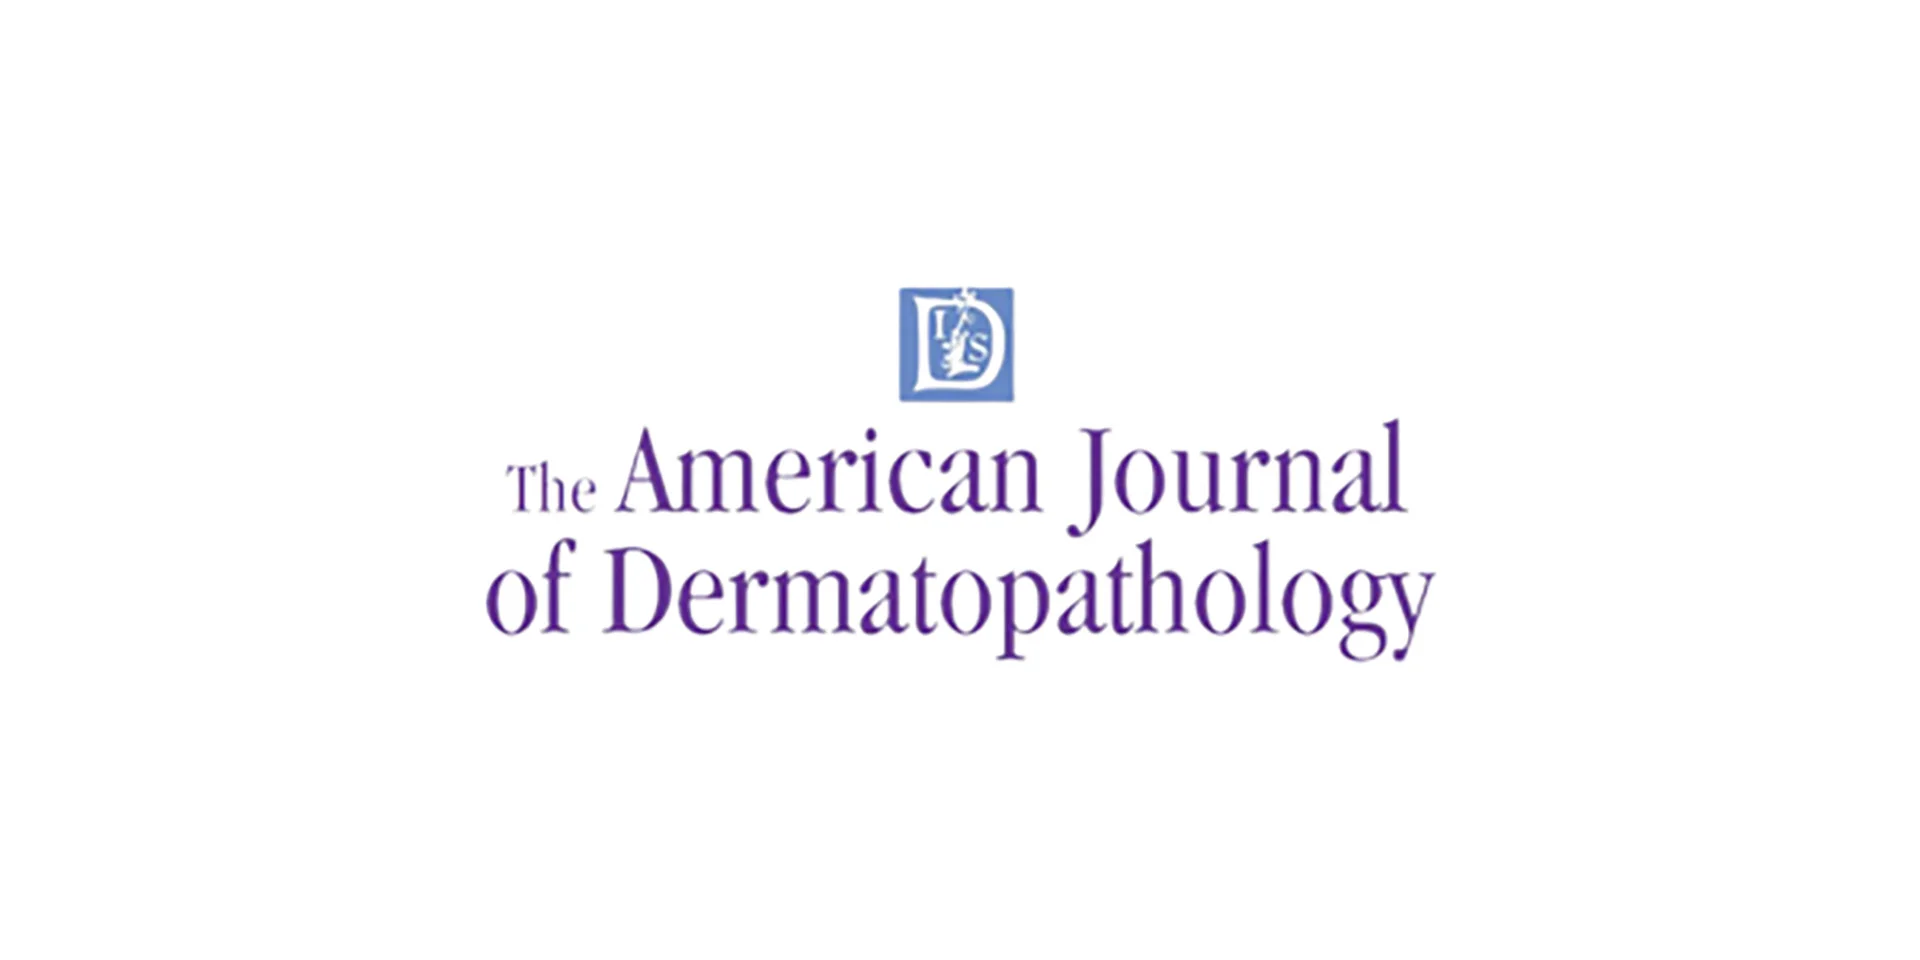 The American Journal of Dermatopathology